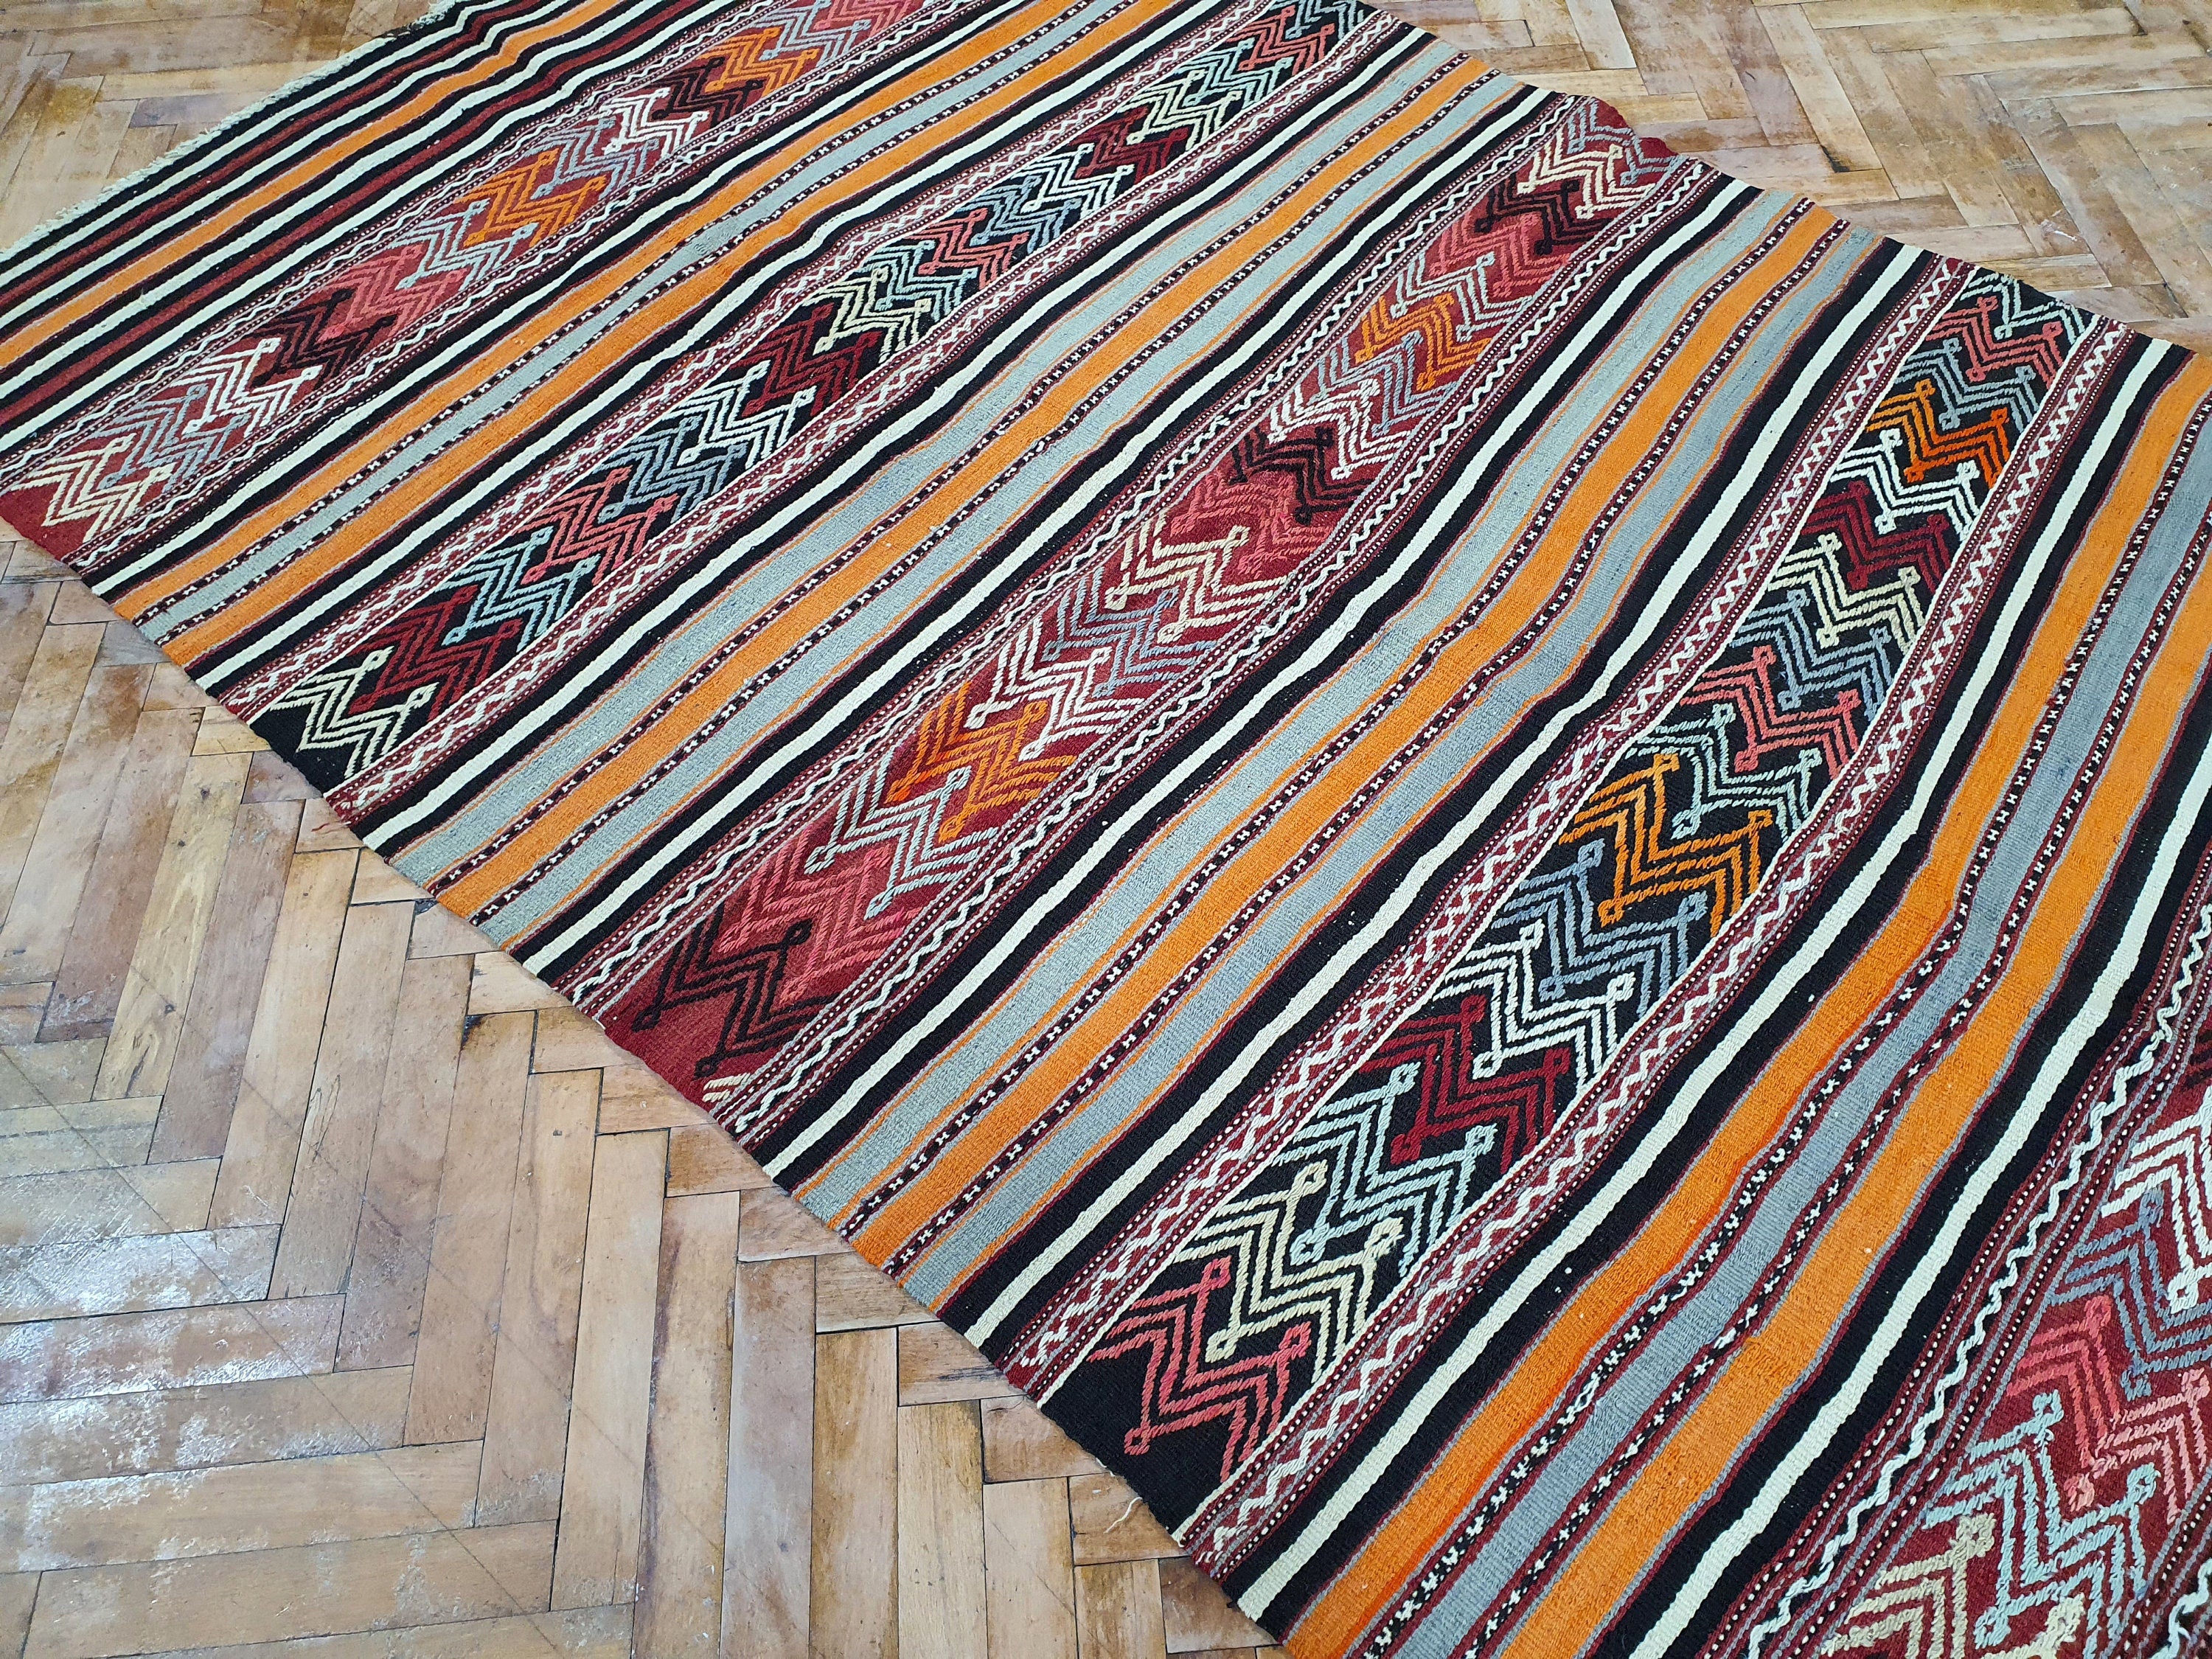 Tribal Kilim Rug, Living Room Rug, Rustic Rug, Organic Wool Rug, Antique Rugs, Ethnic Boho Brown and Orange Persian Area Rug 7'9''x4'6'' ft